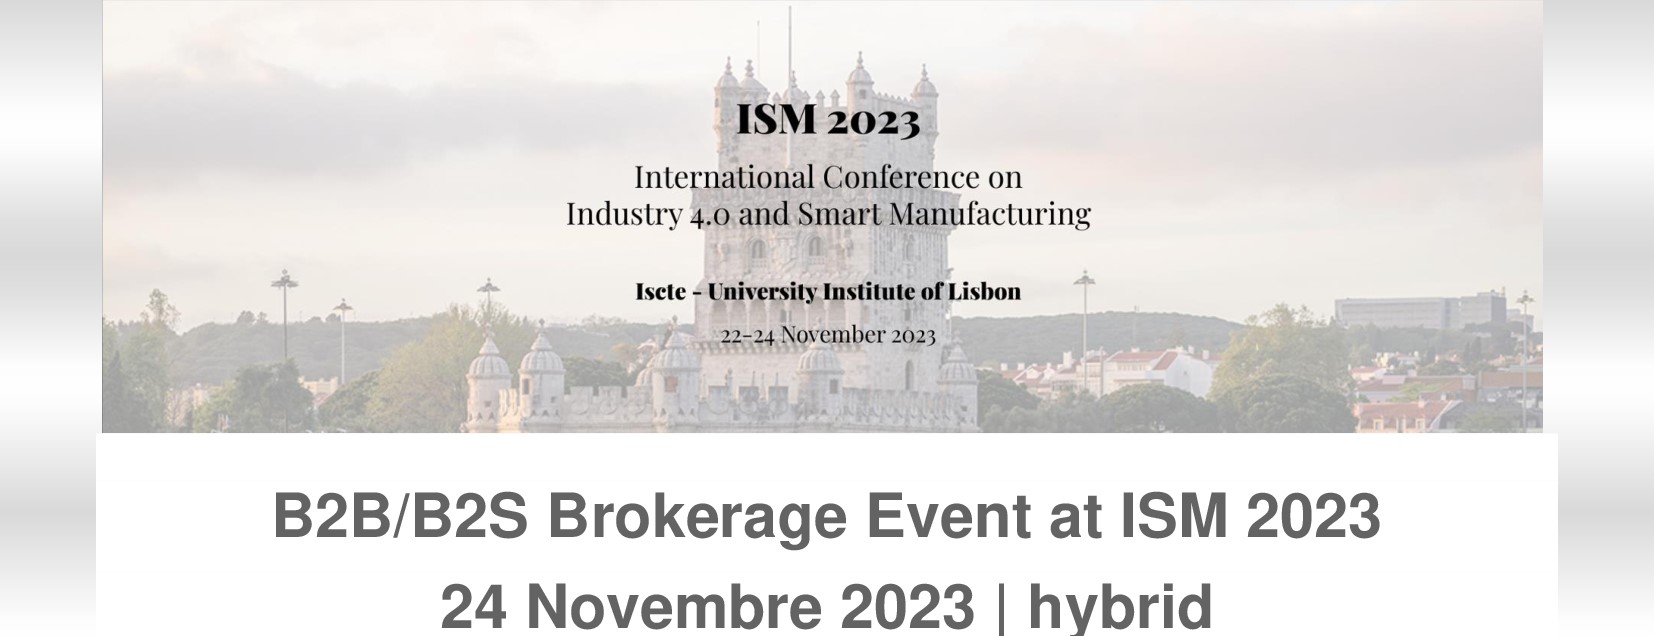 B2B/B2S (Business to Business/Business to Science) Brokerage Event @ISM2023 – ibrido-  24 novembre 2023